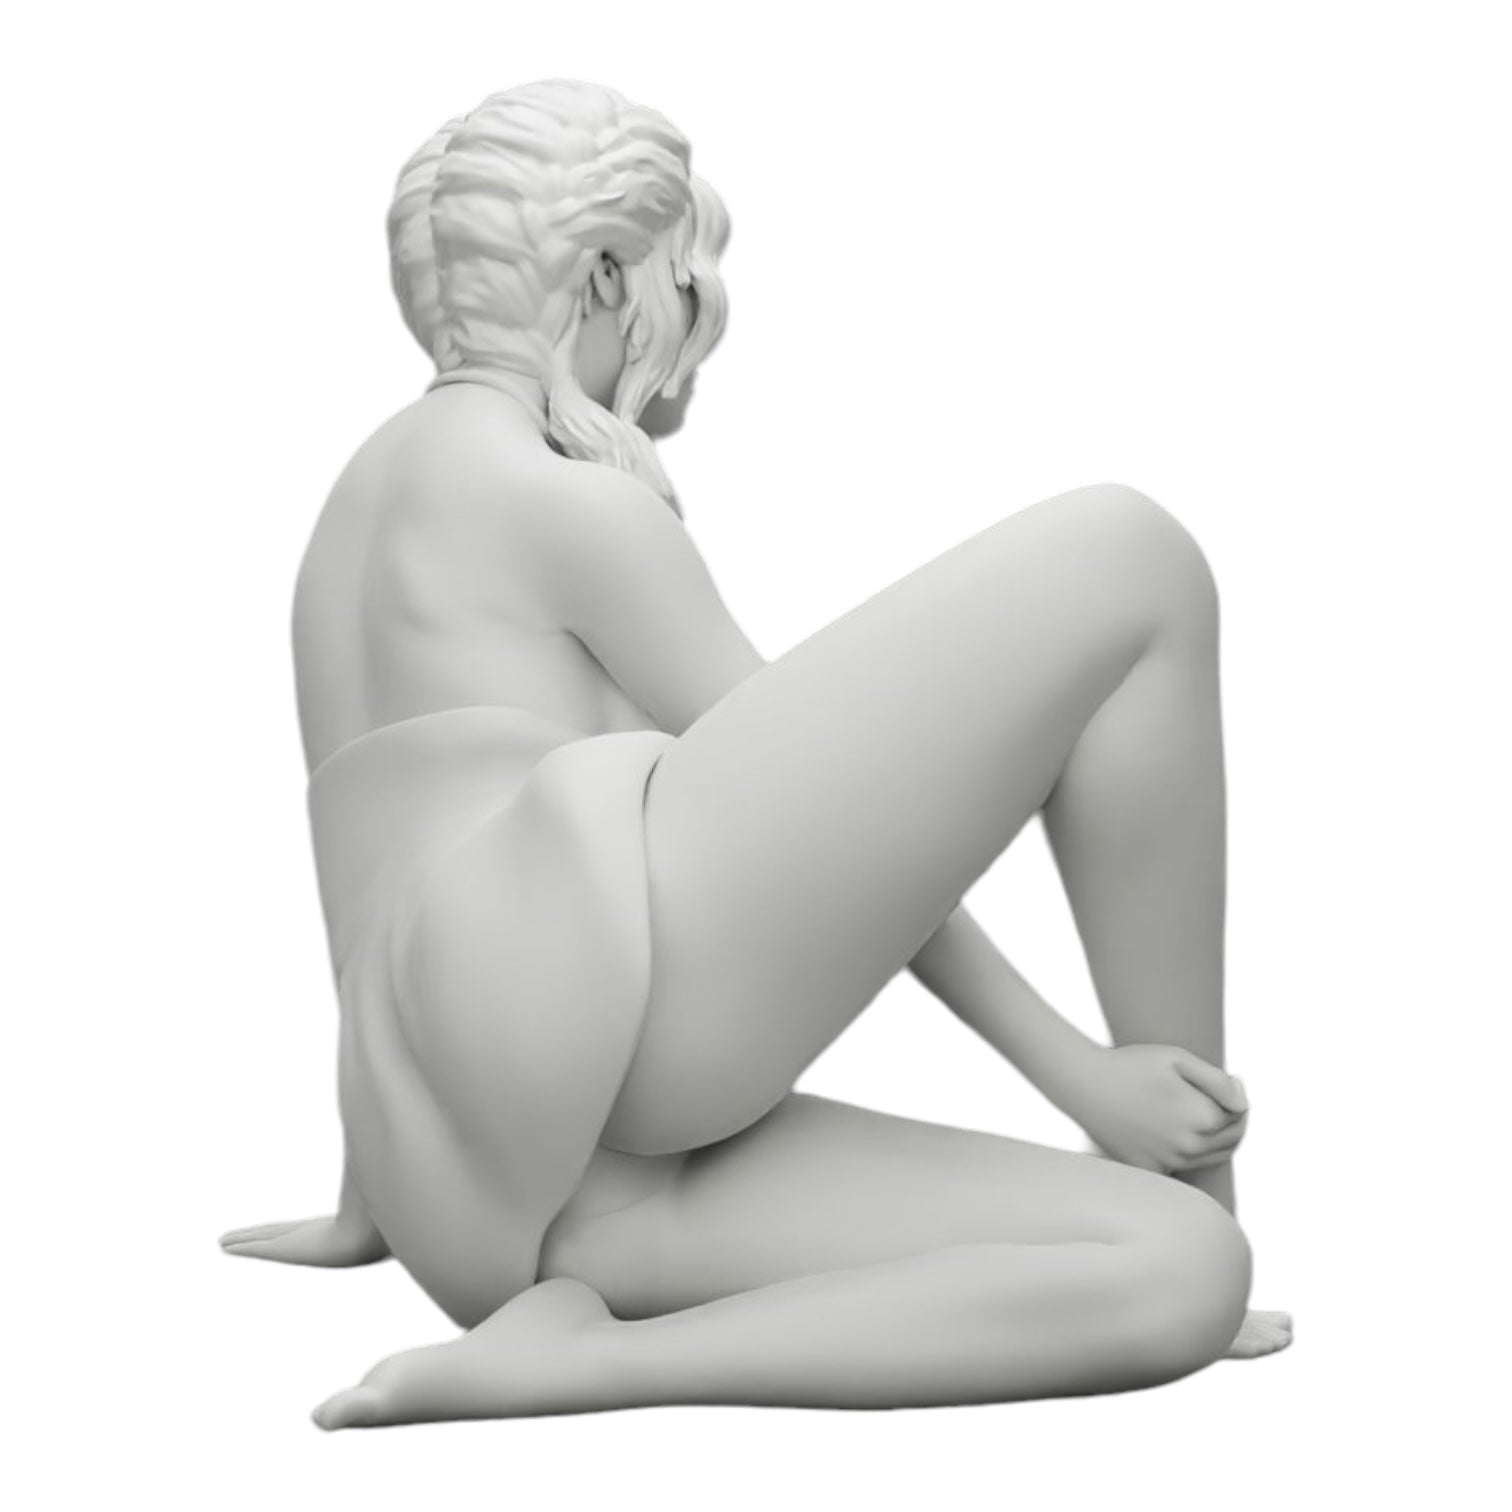 Diorama Modellbau Produktfoto 0: Attraktive Frau sitzt entspannt in der Hocke (Ref Nr. A34)